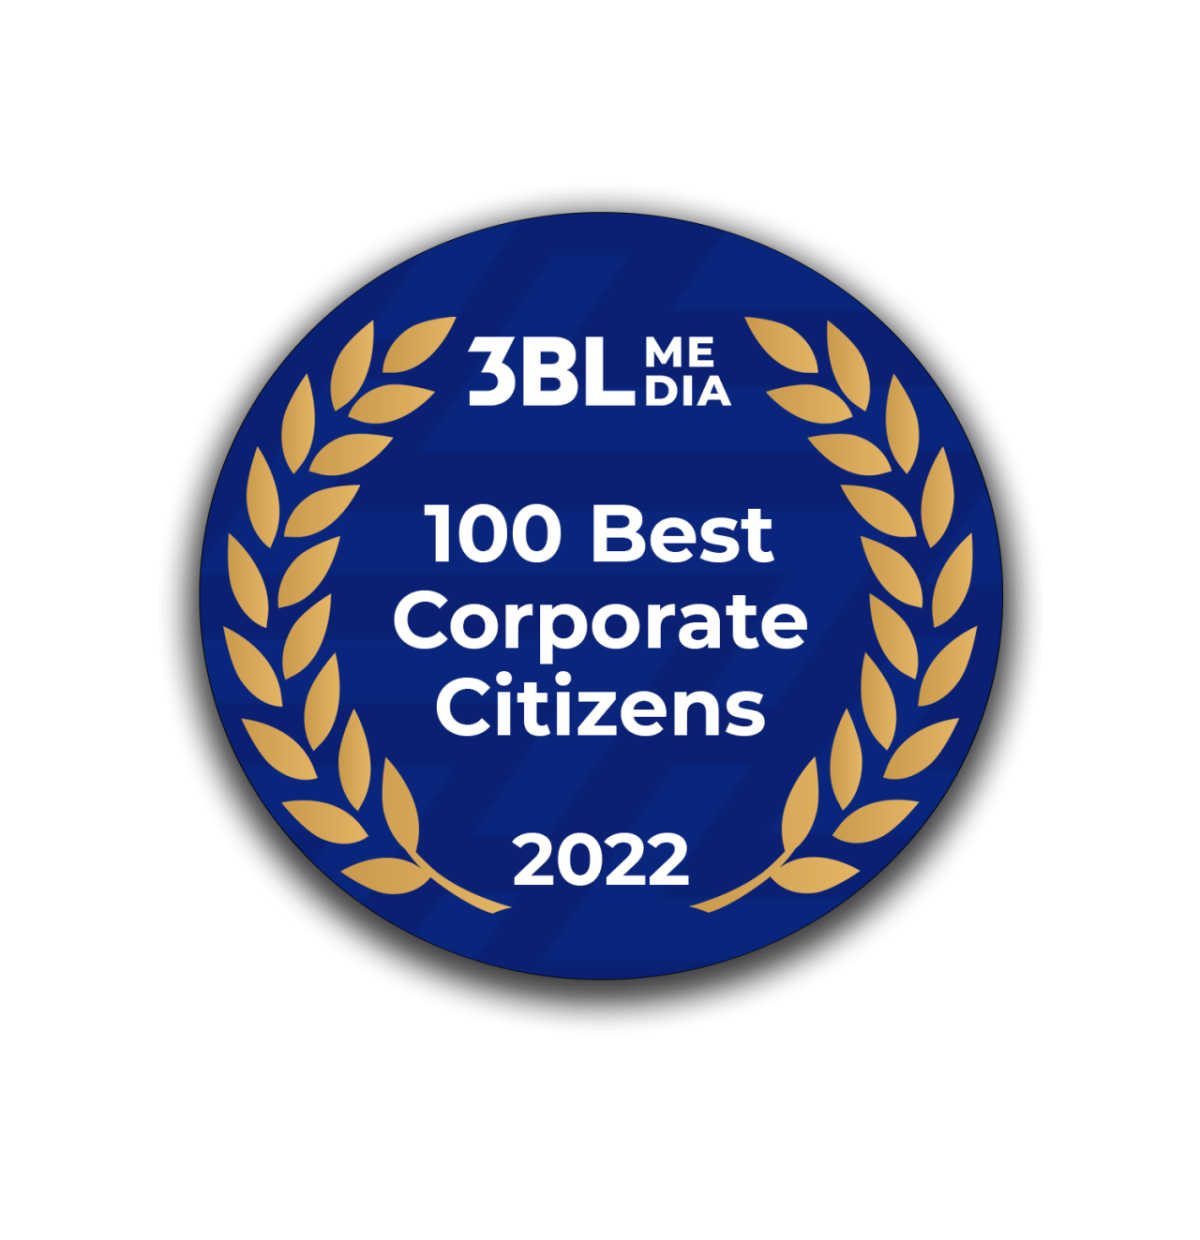 3BL Media 100 Best Corporate Citizens 2022 logo 